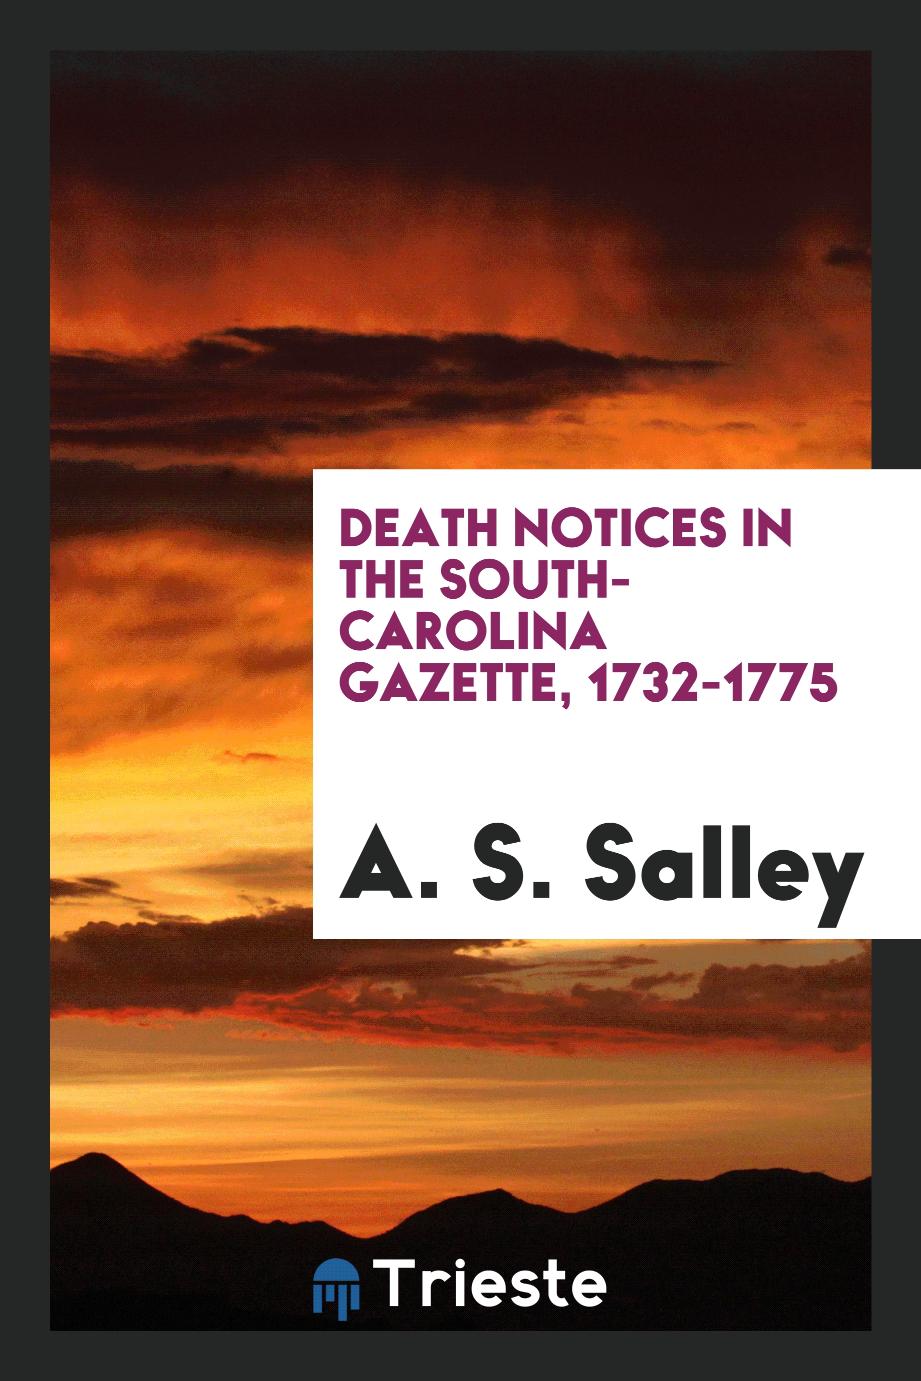 Death notices in the South-Carolina gazette, 1732-1775